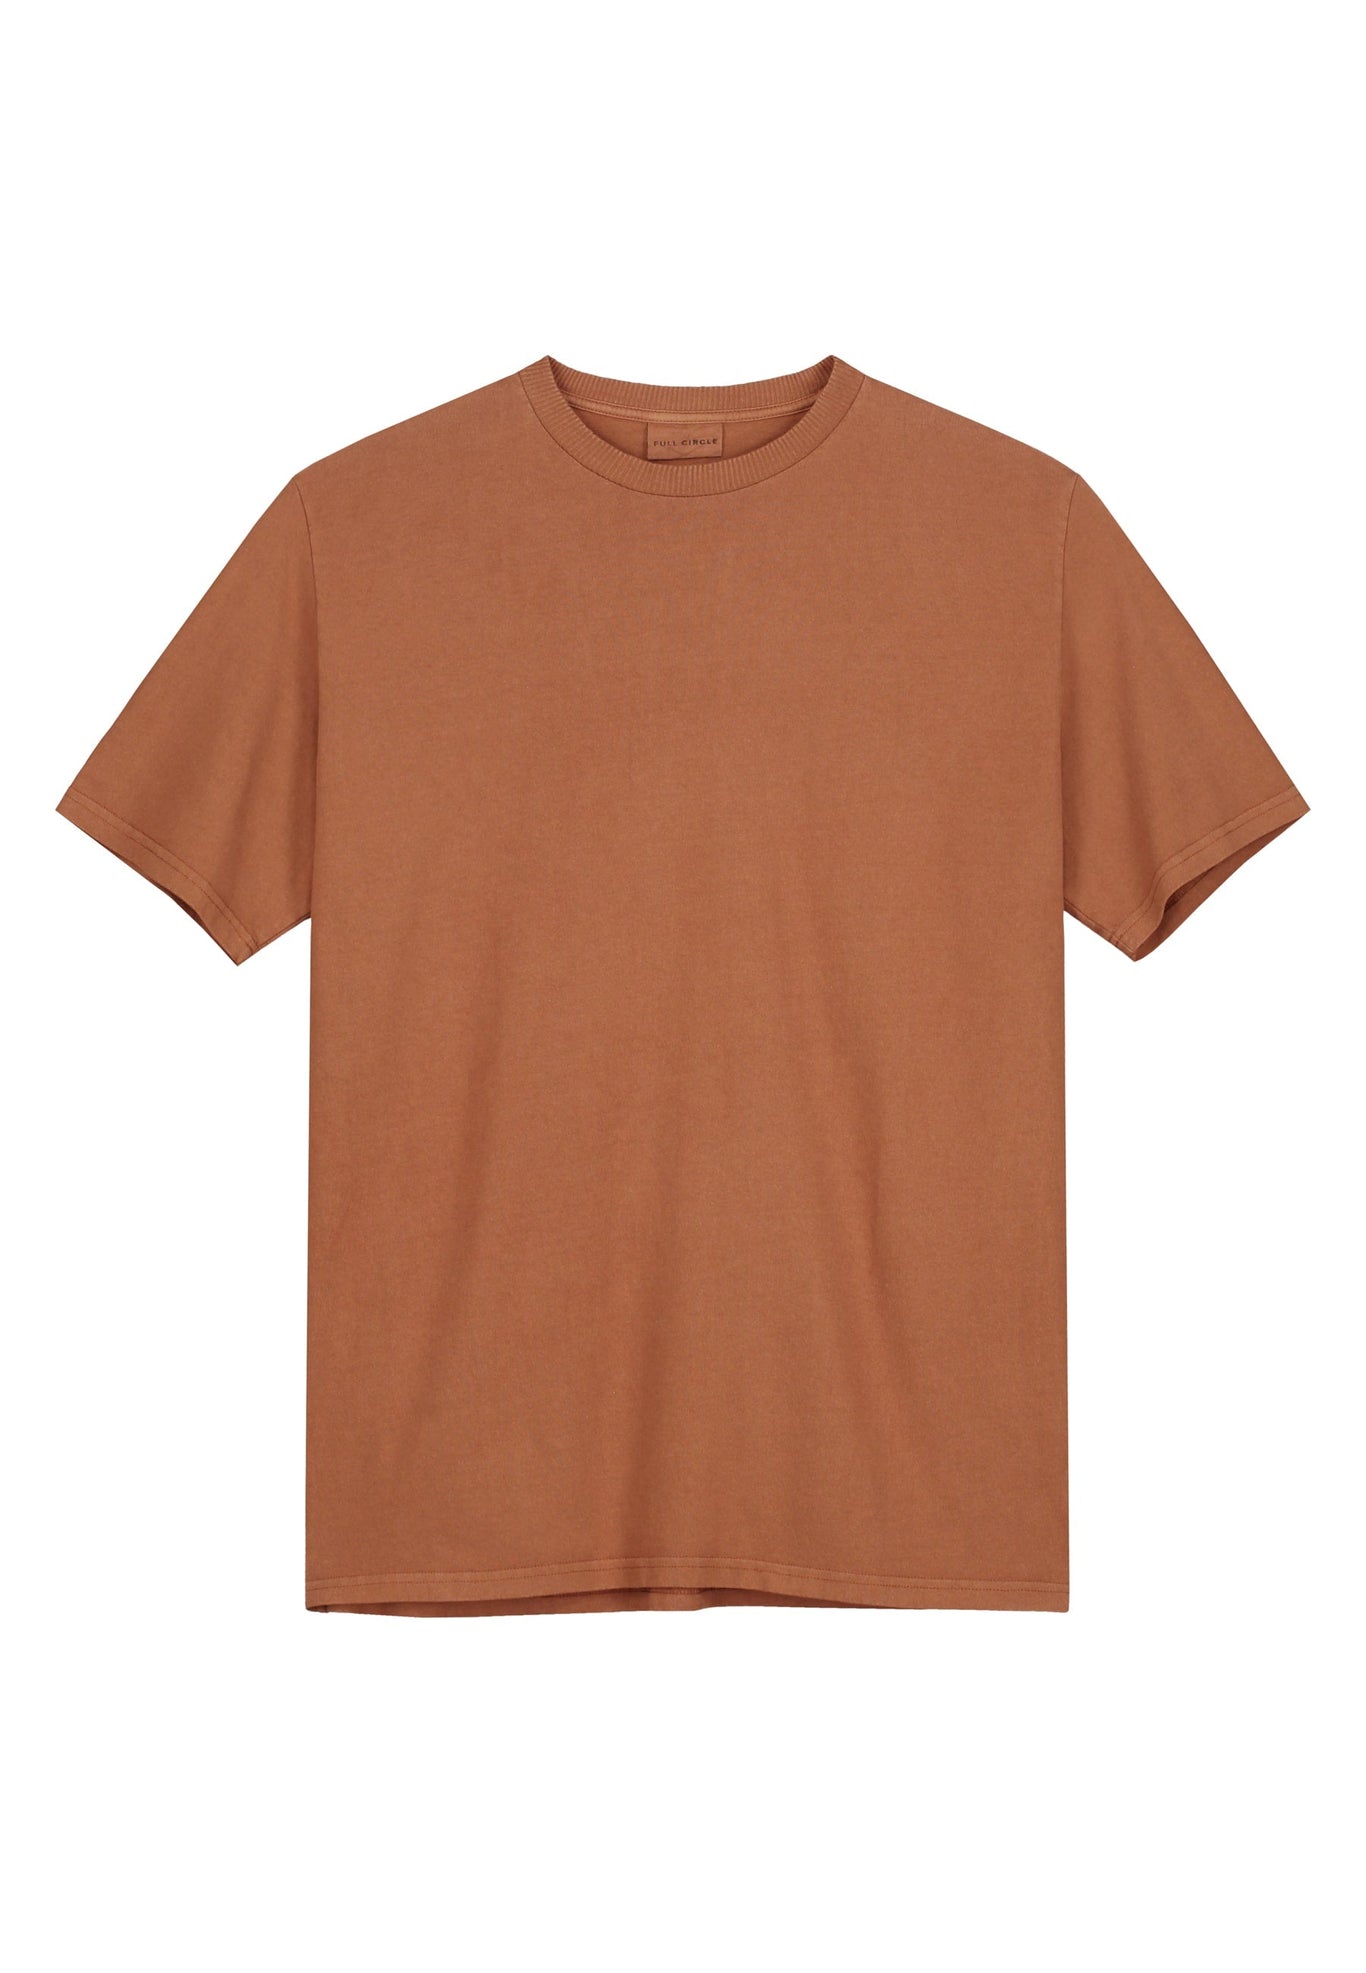 Full Circle Circular T-Shirt Rust